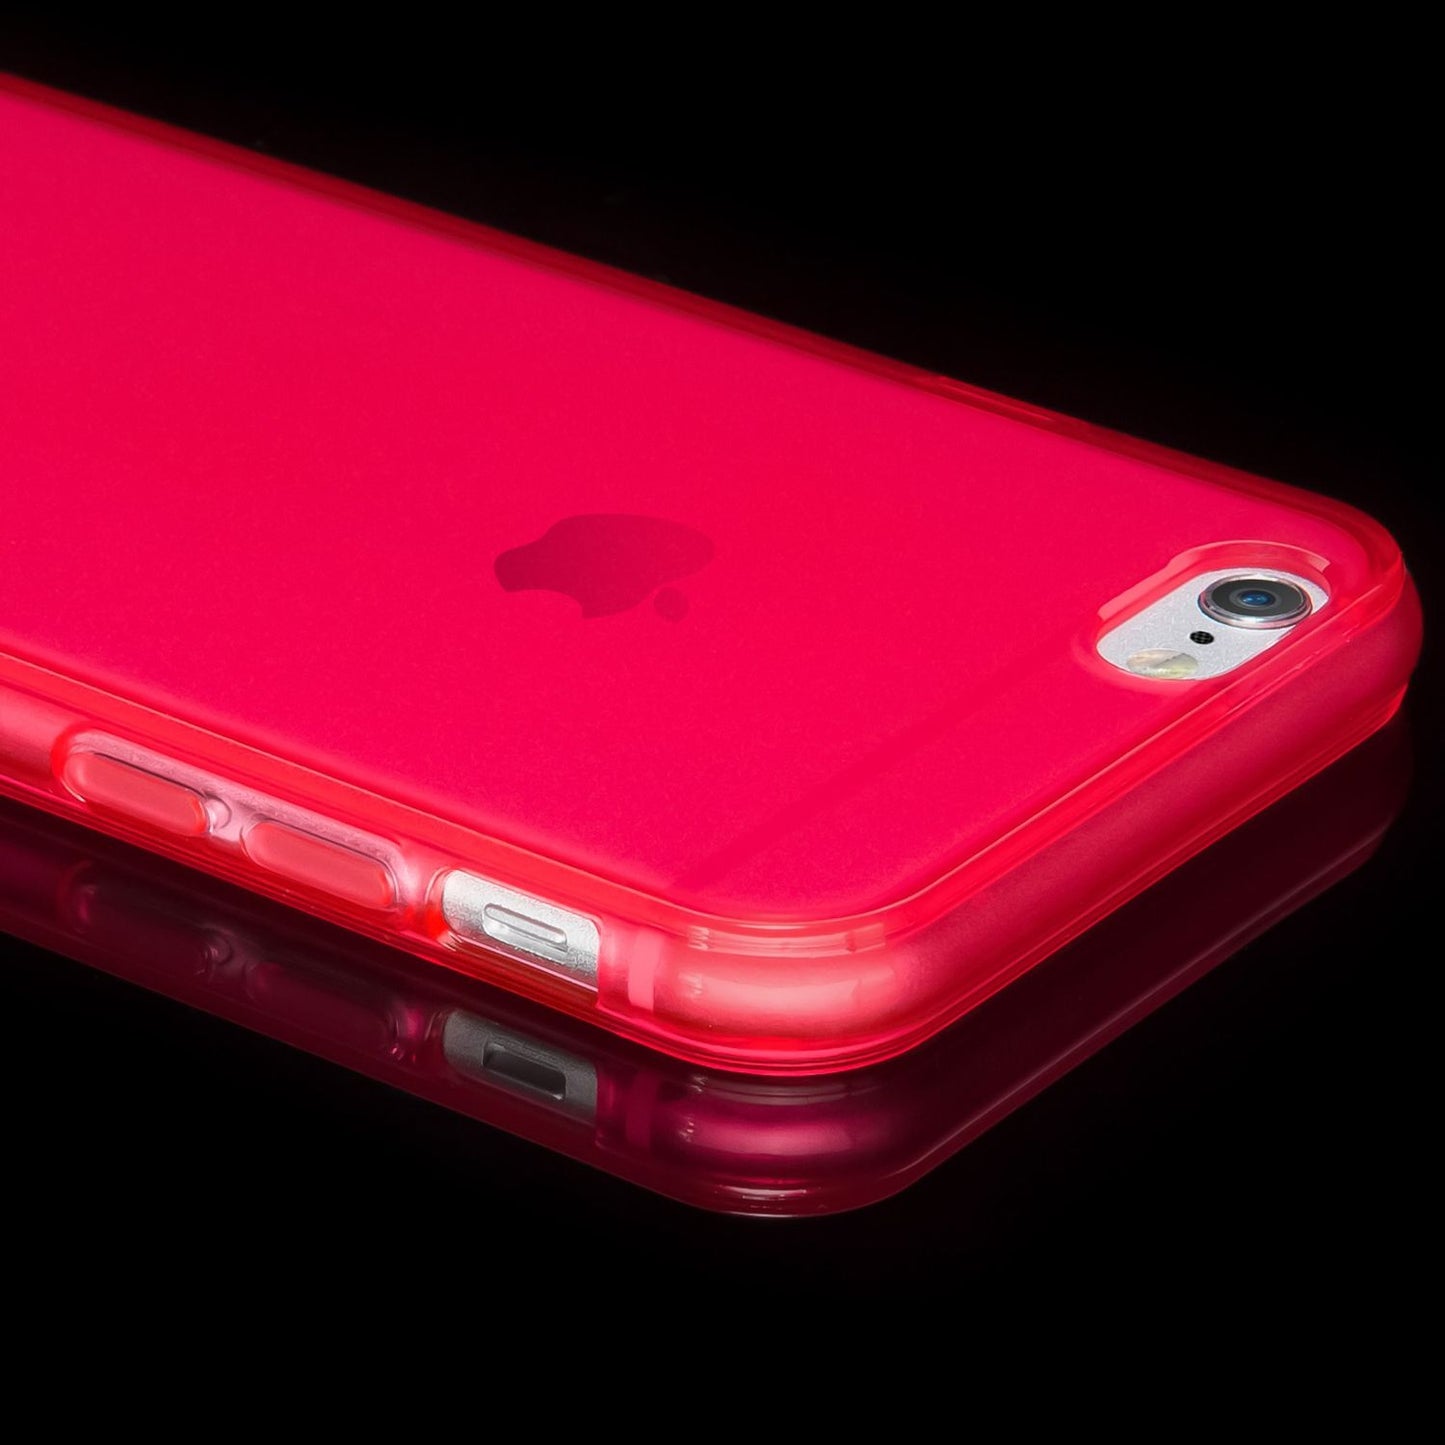 NALIA Schutz Hülle für iPhone 6 Plus 6S Plus, Slim Silikon Case Phone Cover Etui